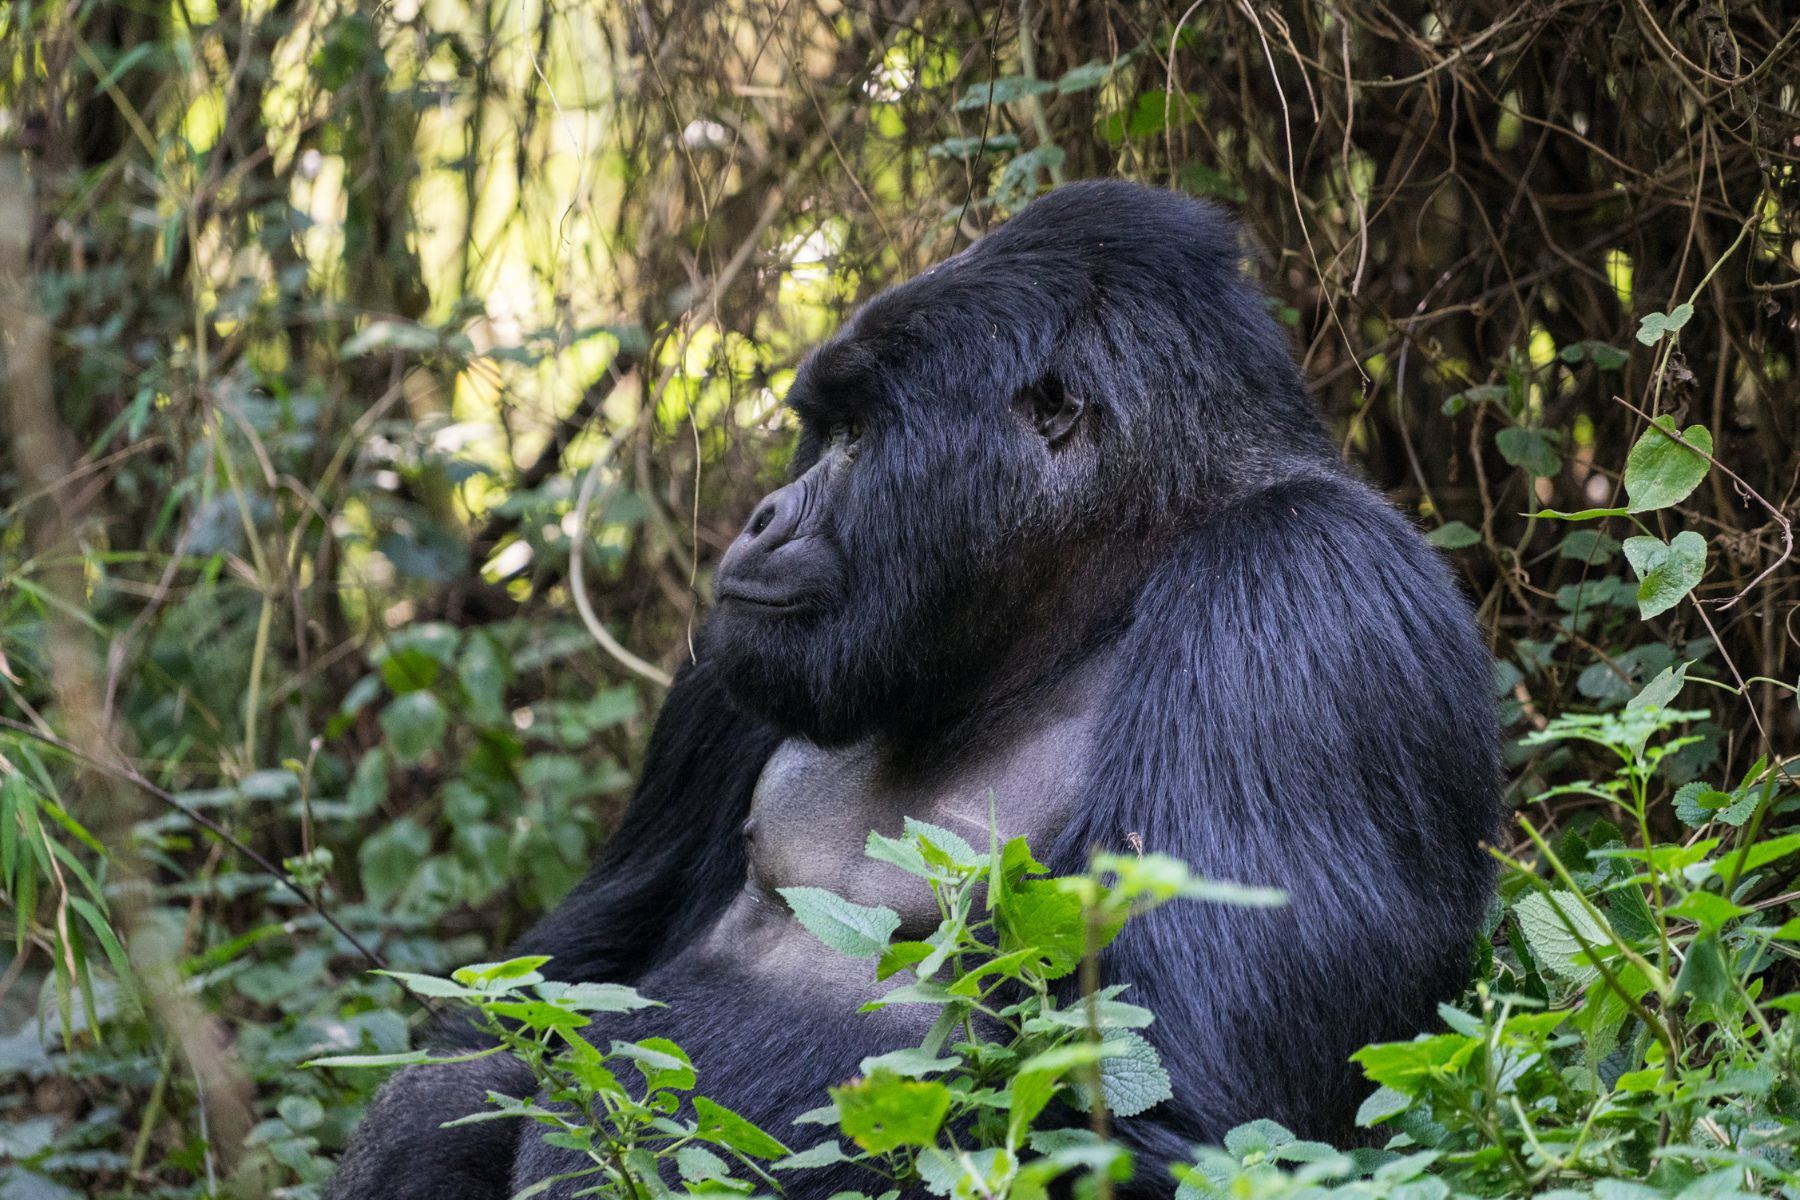 A gorilla seen during gorilla trekking in the Mgahinga Gorilla National Park, Uganda